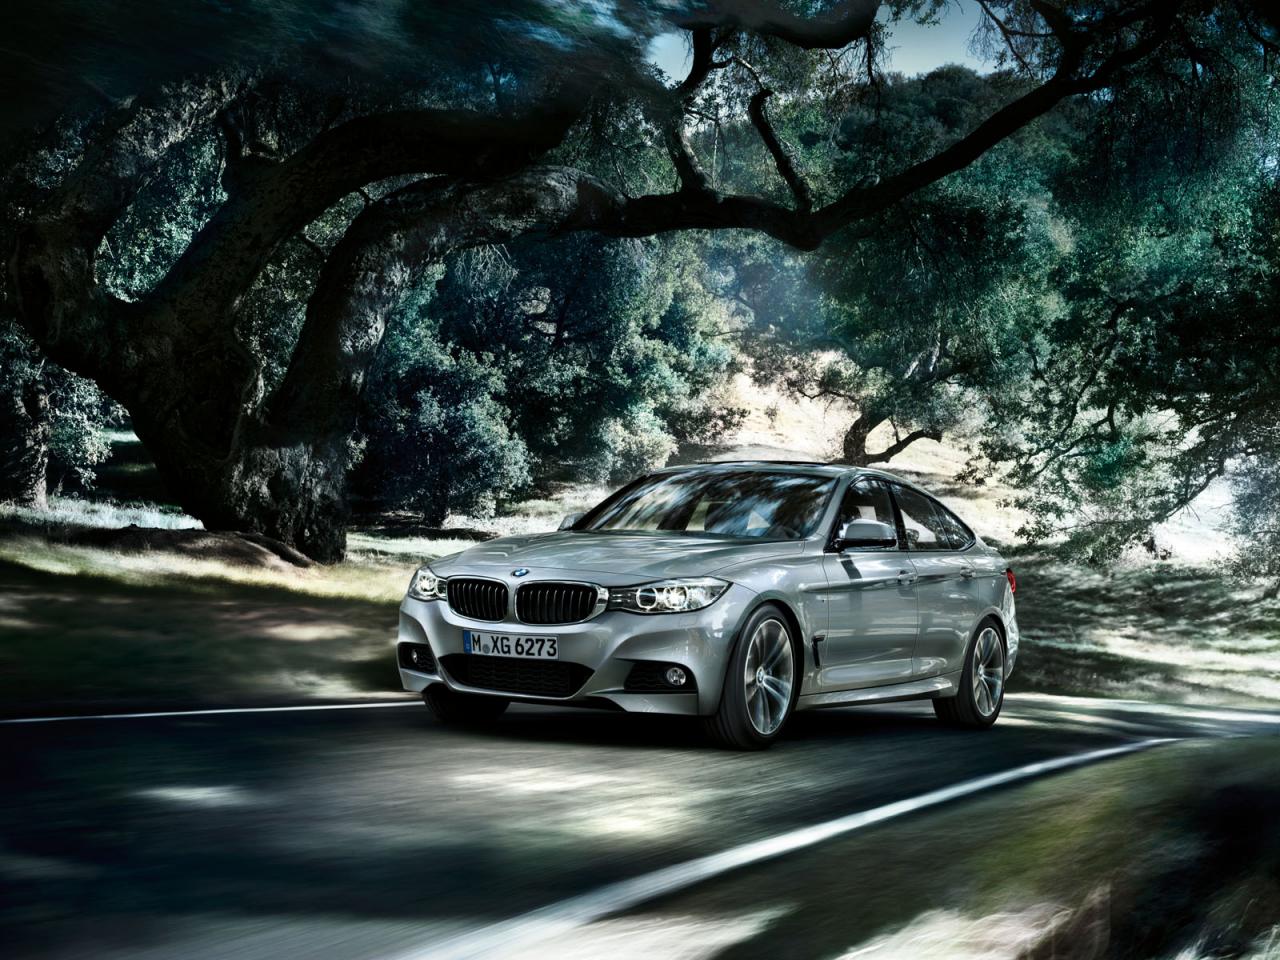 BMW announces plans for New York Auto Show